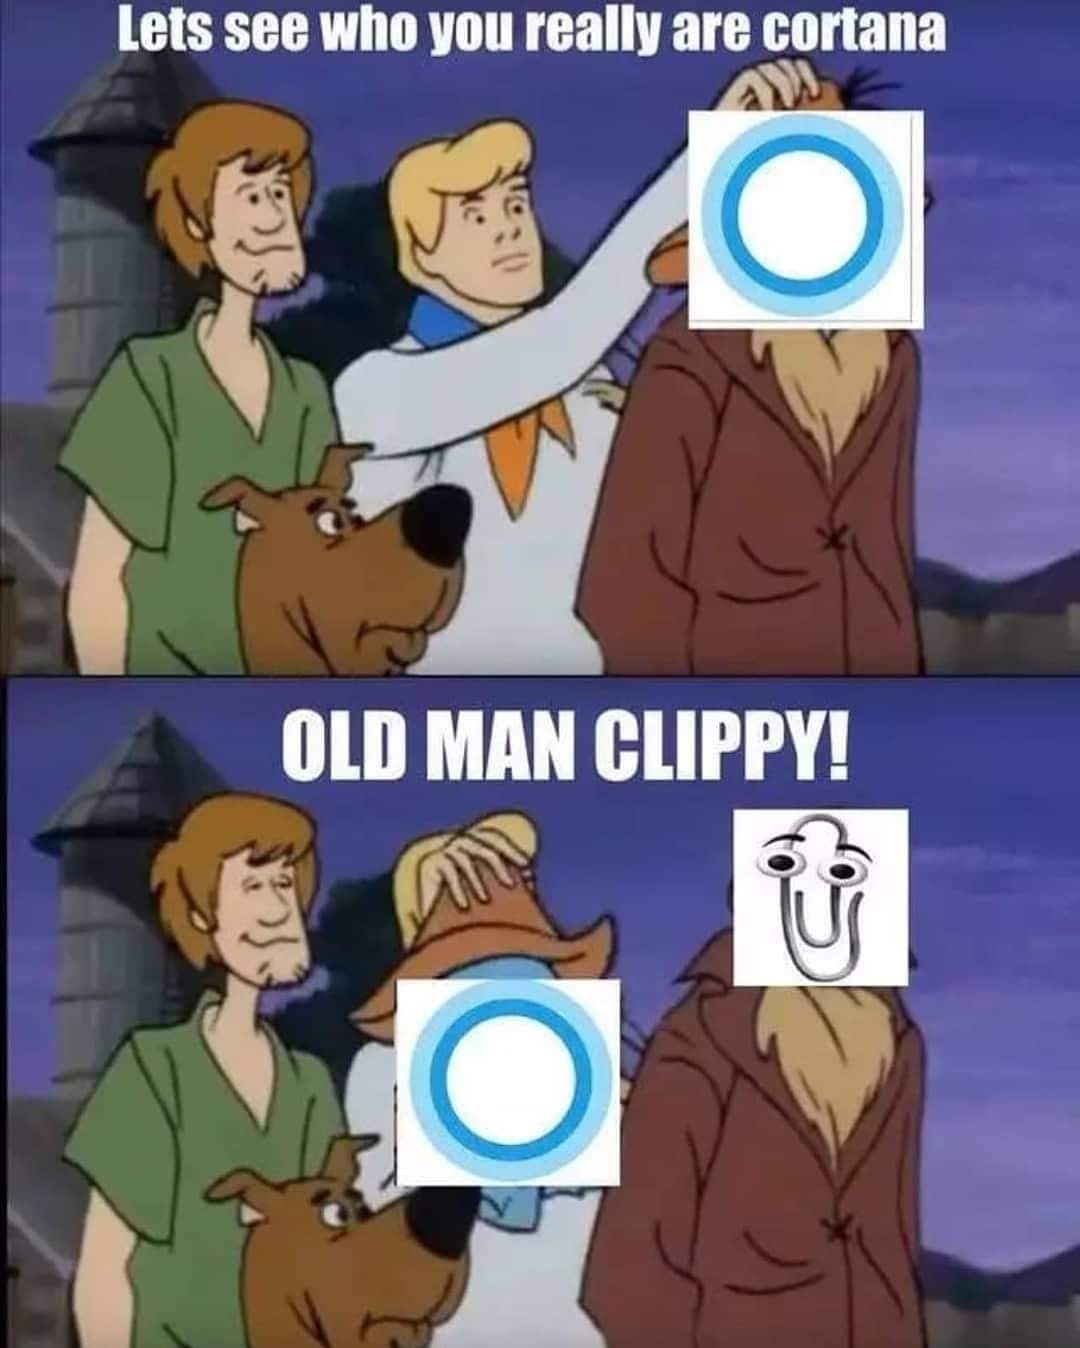 Fck clippy - meme